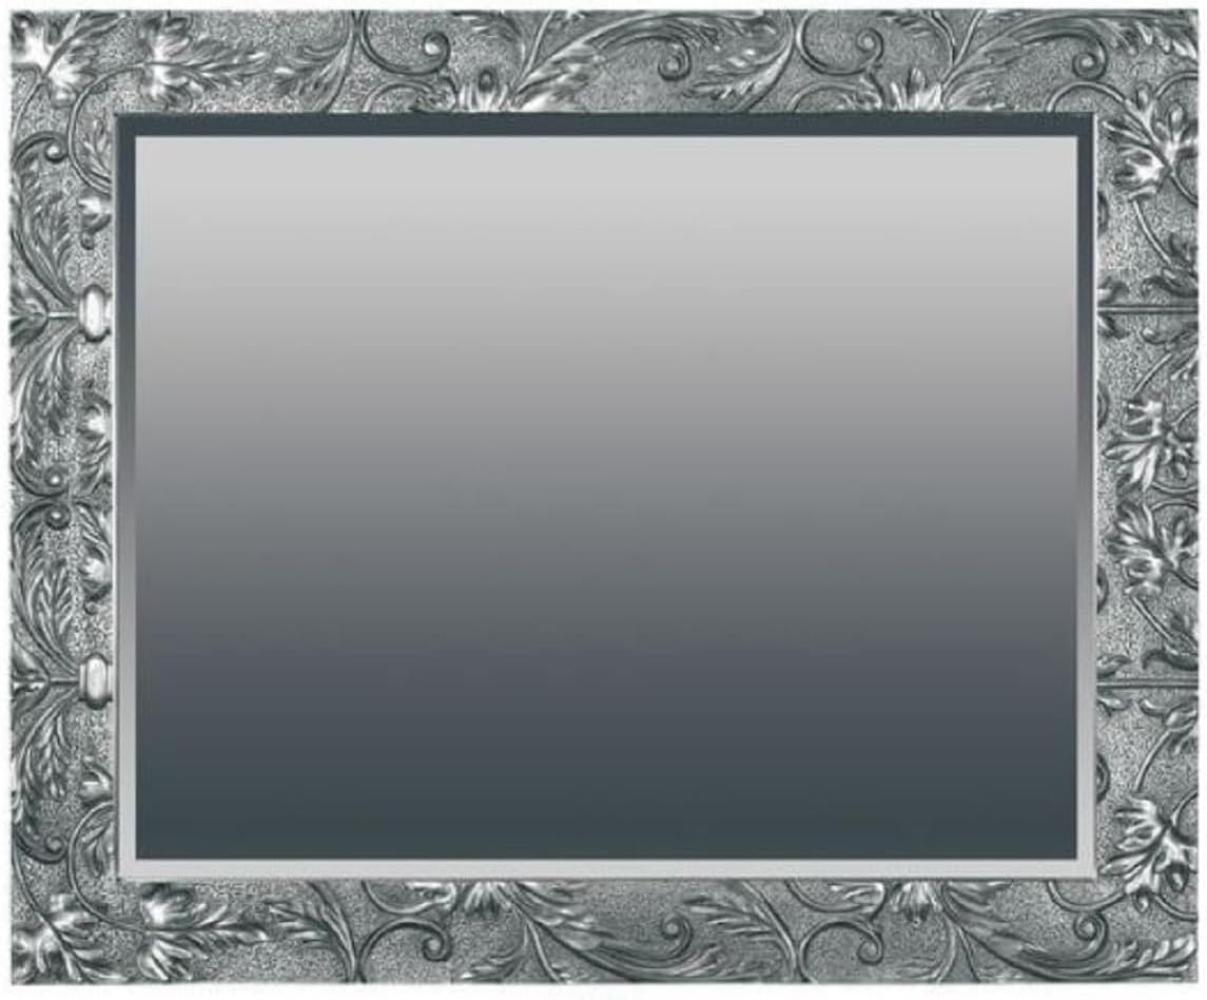 Casa Padrino Barock Spiegel Silber 110 x H. 90 cm - Rechteckiger Wandspiegel im Barockstil - Prunkvoller Antik Stil Garderoben Spiegel - Barock Interior - Handgefertigte Barock Möbel Bild 1